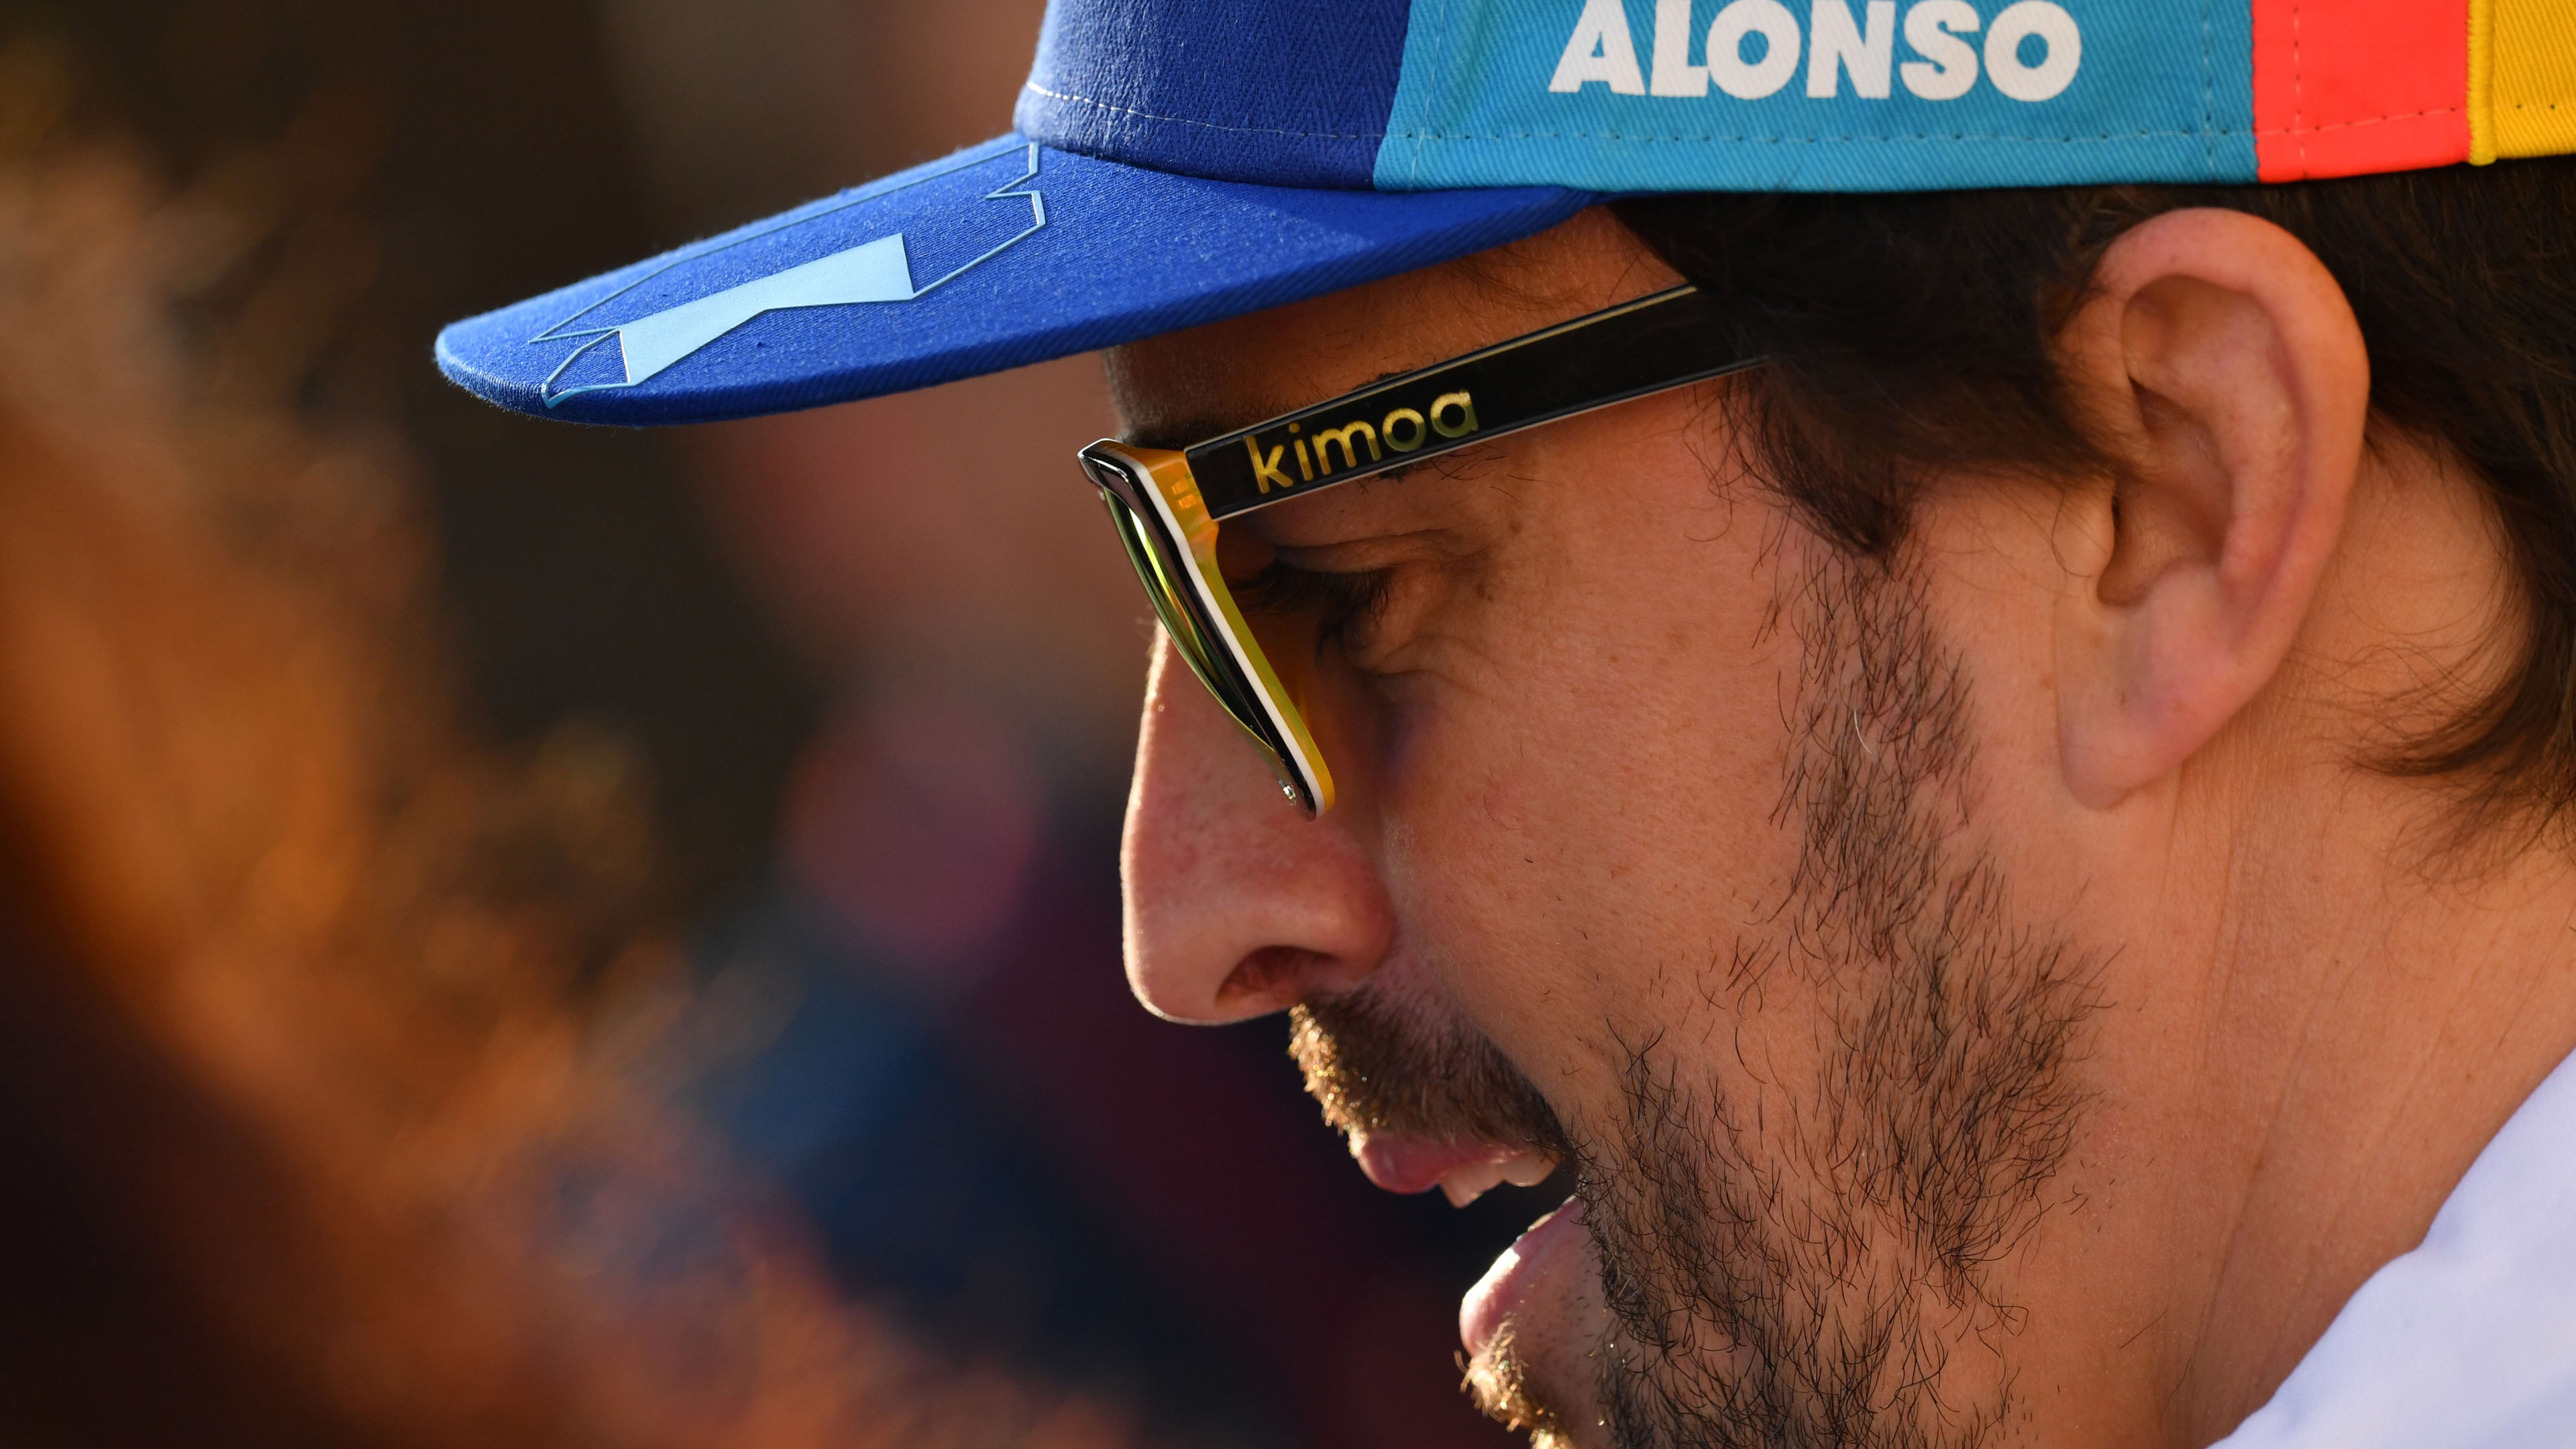 Alonso%20MAIN.jpg